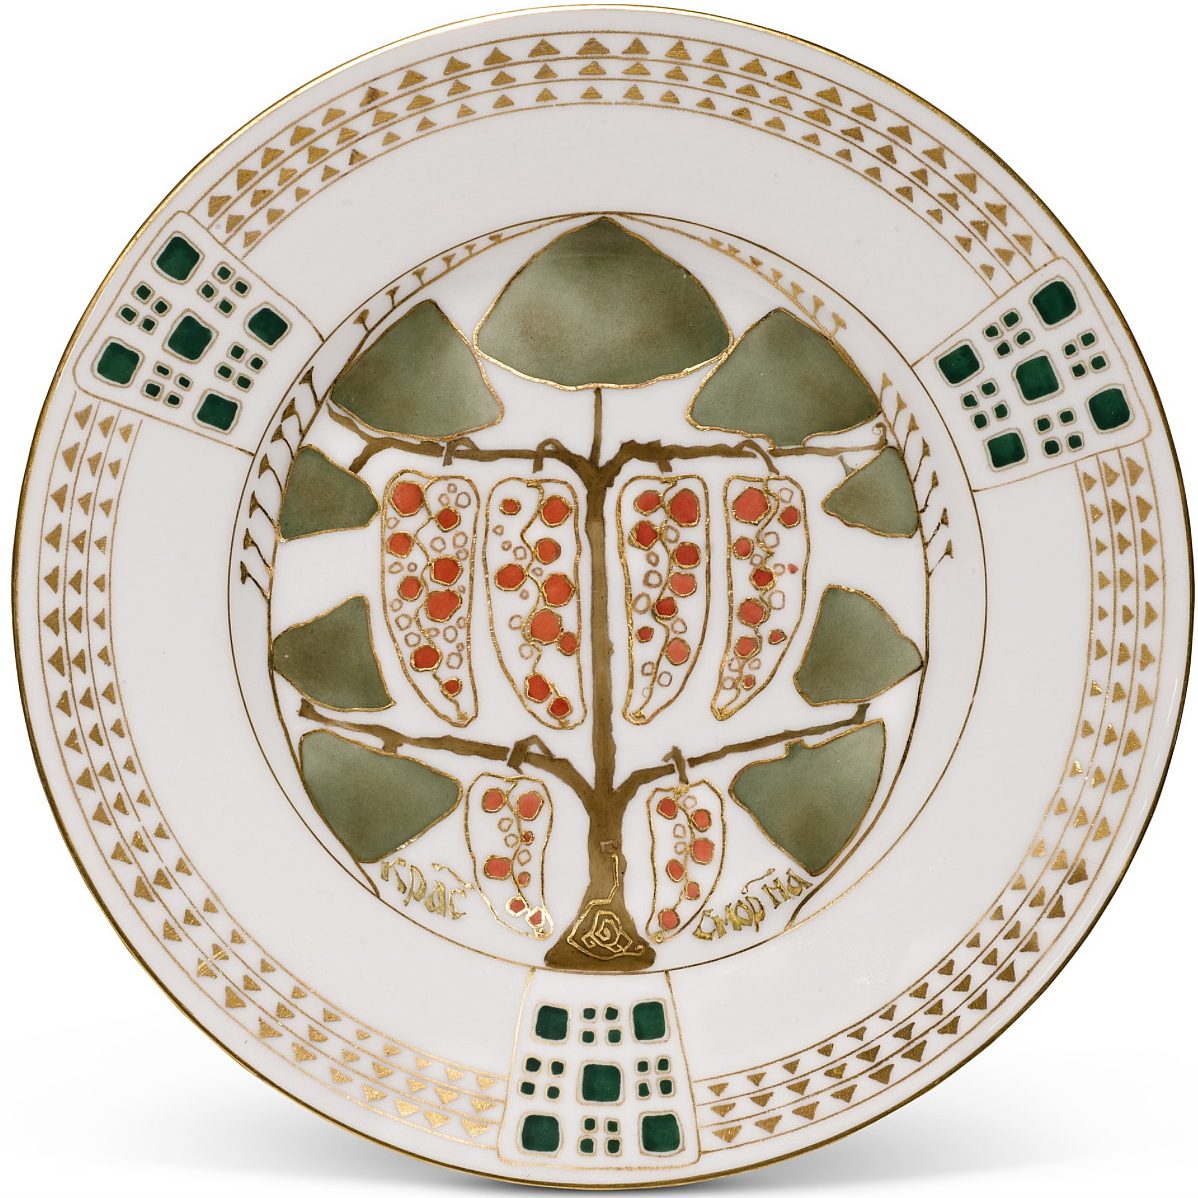 Kornilov Brothers porcelain plate "Red Currant" by Ivan Galnbek. Russian porcelain